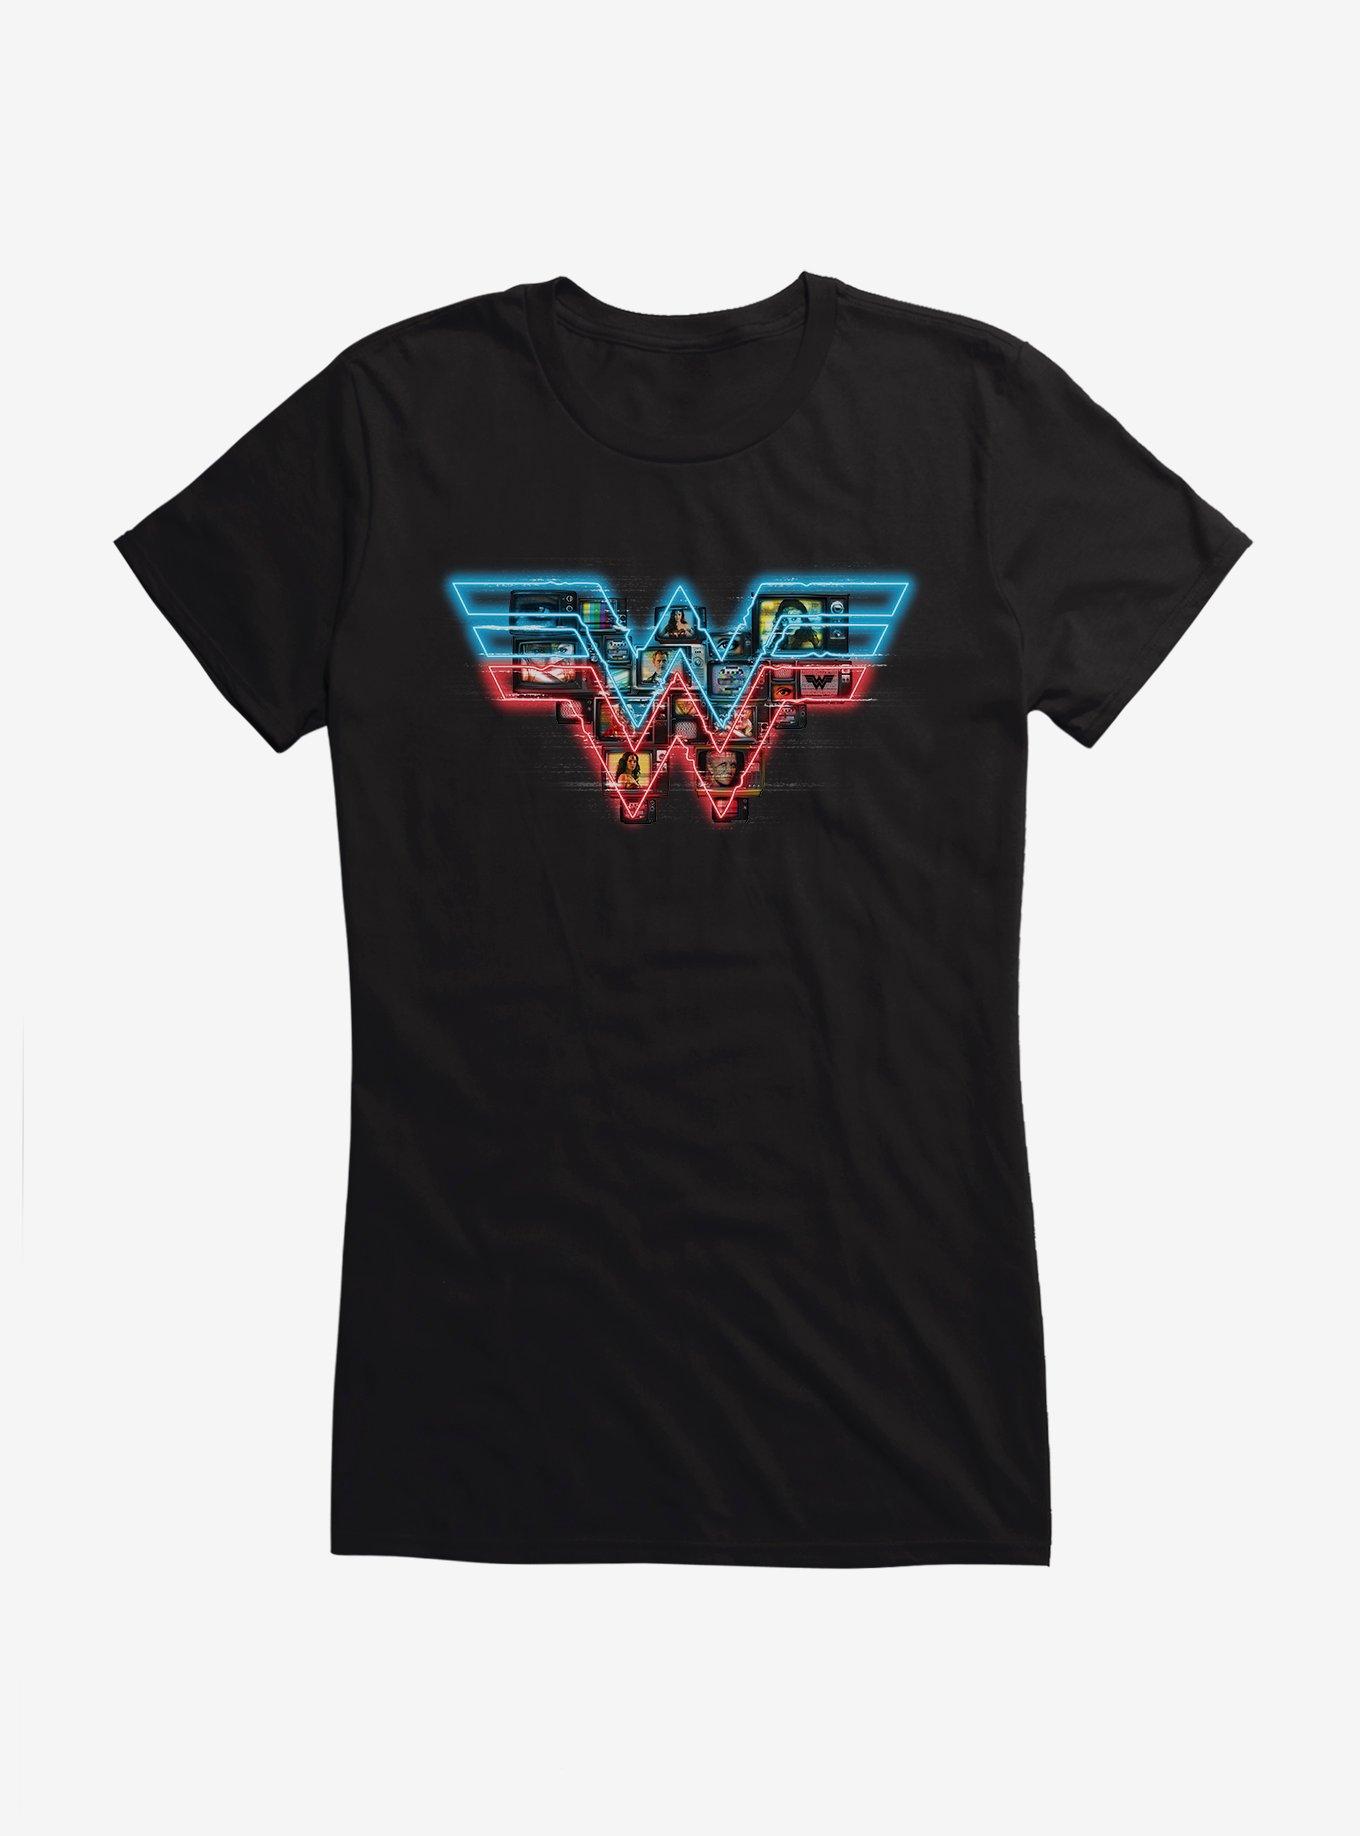 DC Comics Wonder Woman 1984 TV Logo Girls T-Shirt